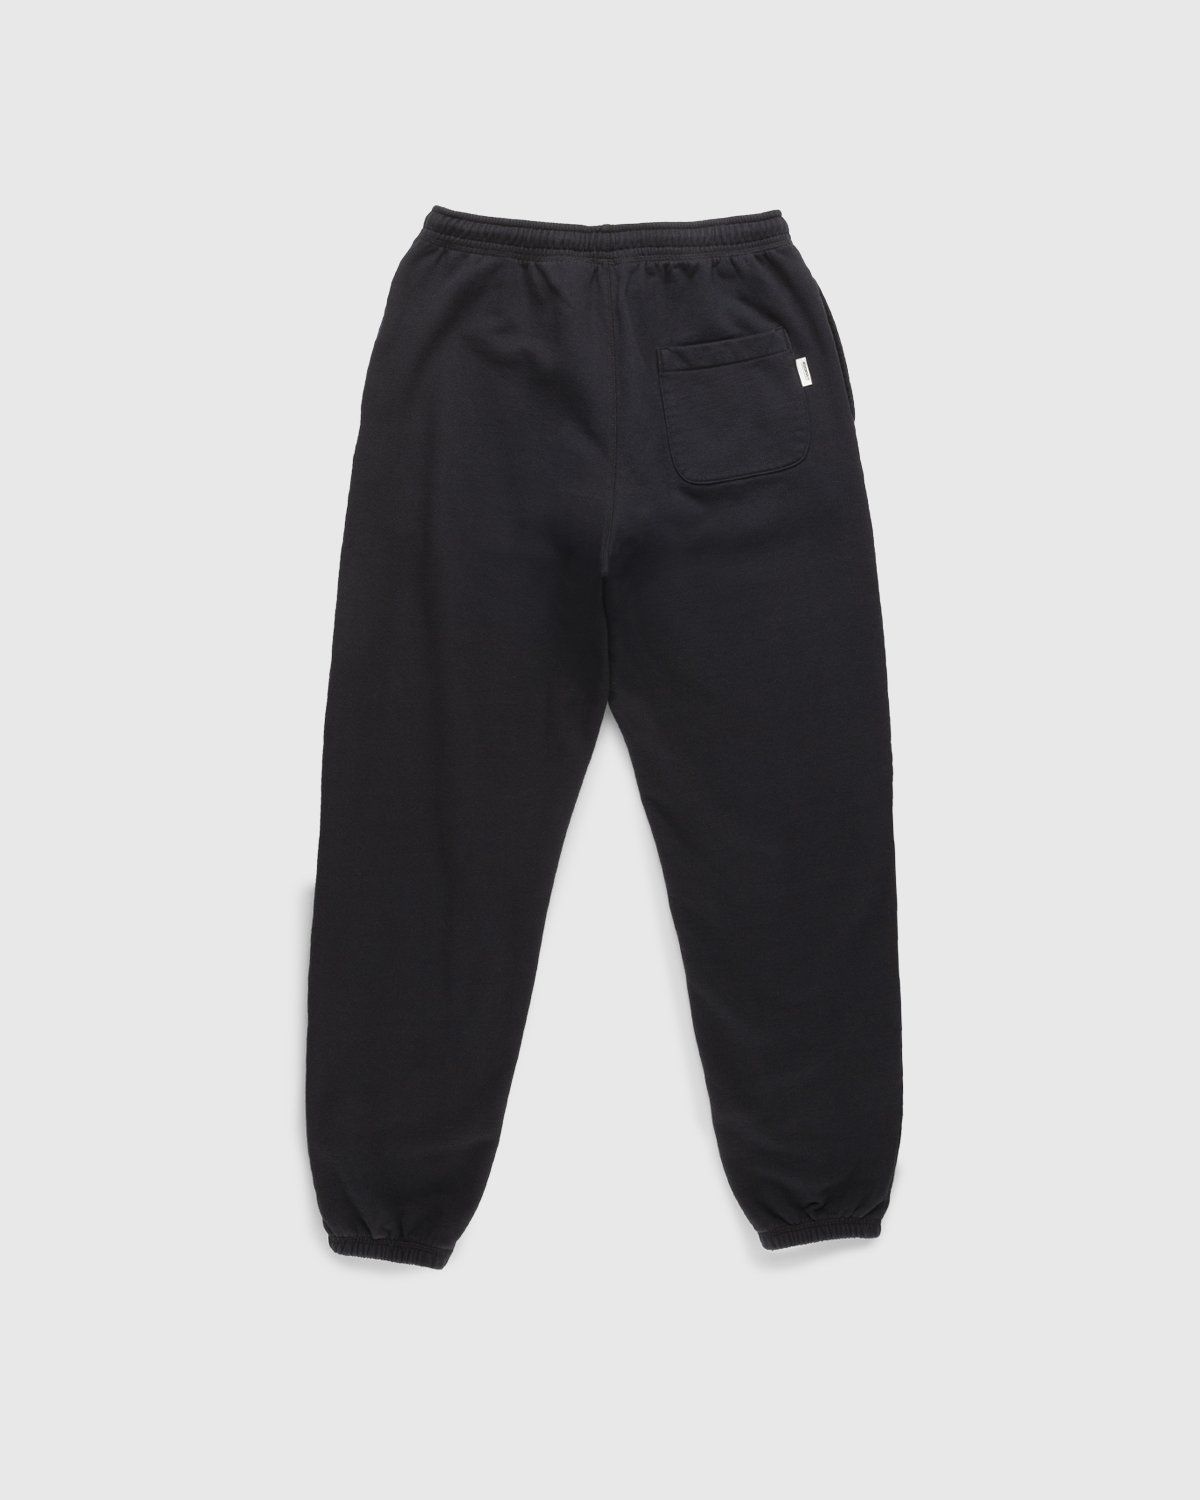 Highsnobiety – Logo Fleece Staples Pants Black - Sweatpants - Black - Image 2